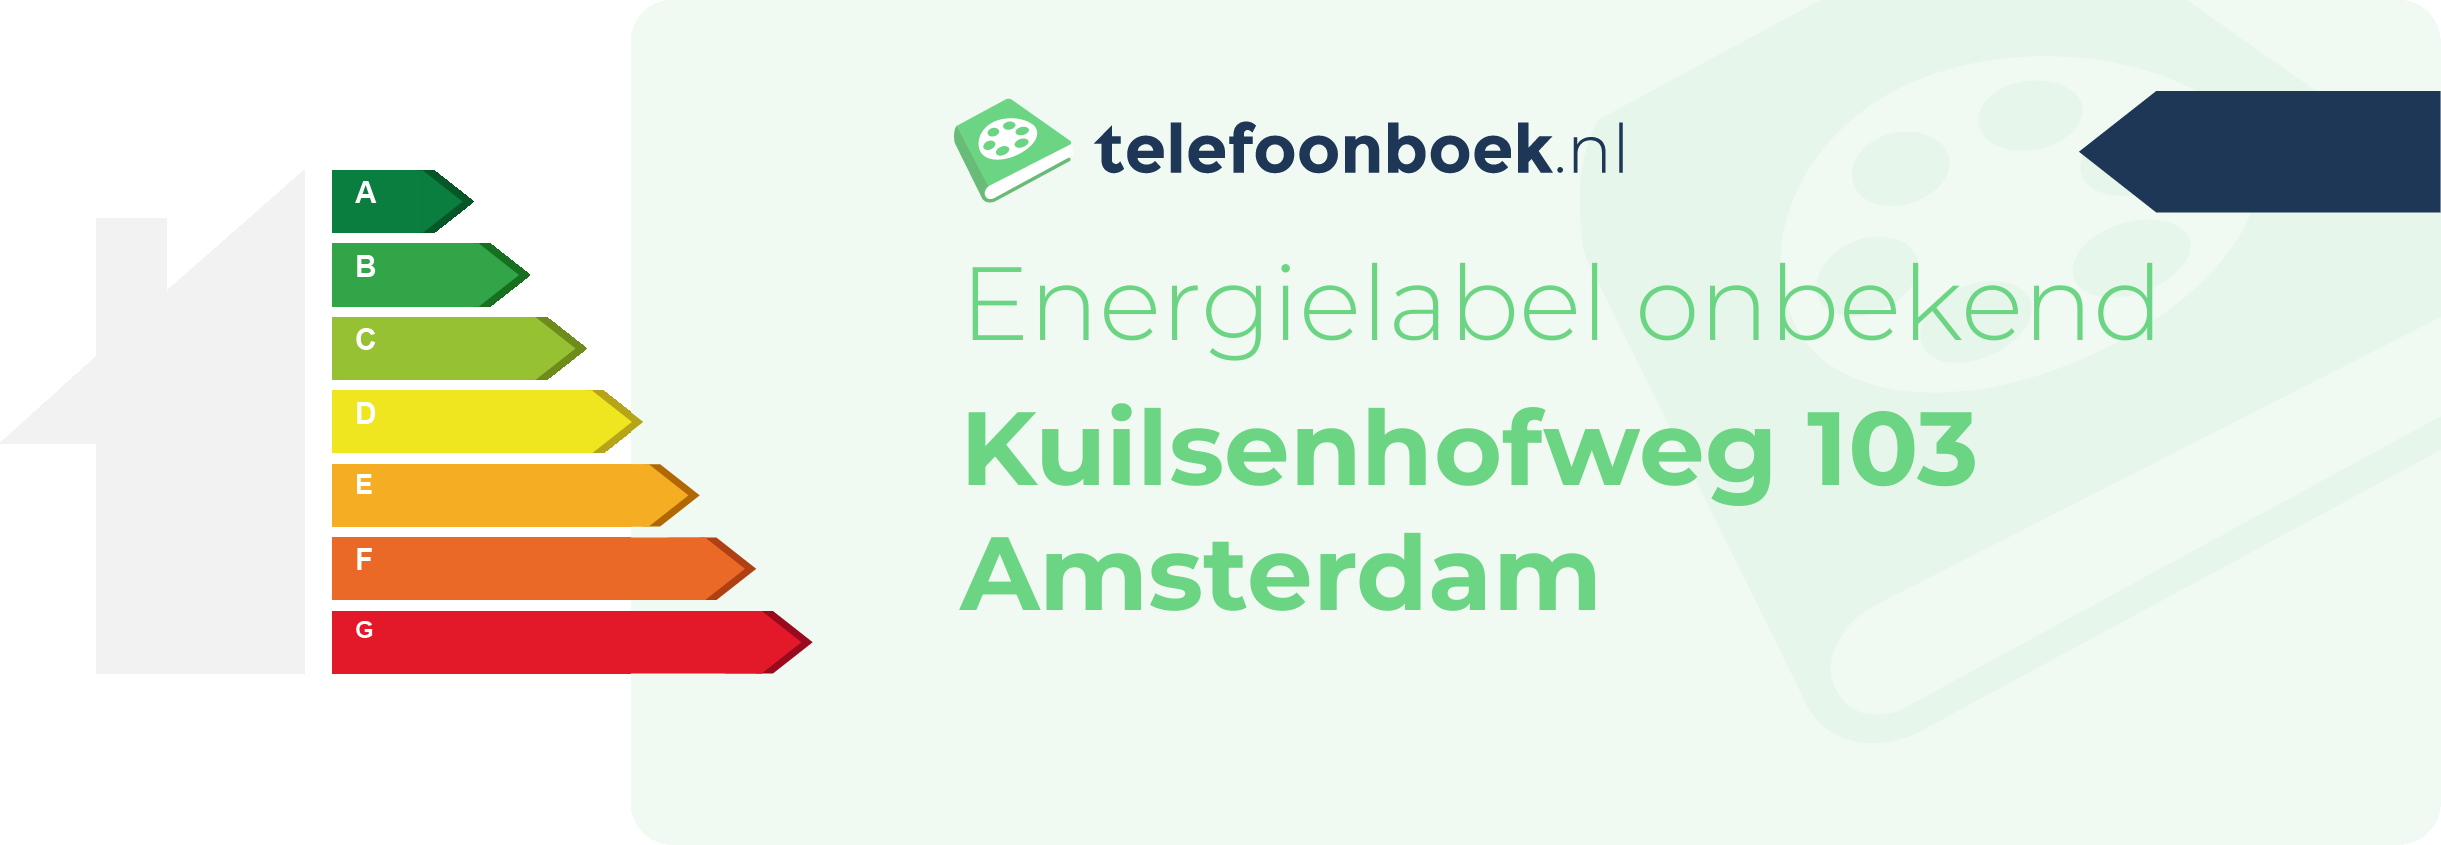 Energielabel Kuilsenhofweg 103 Amsterdam